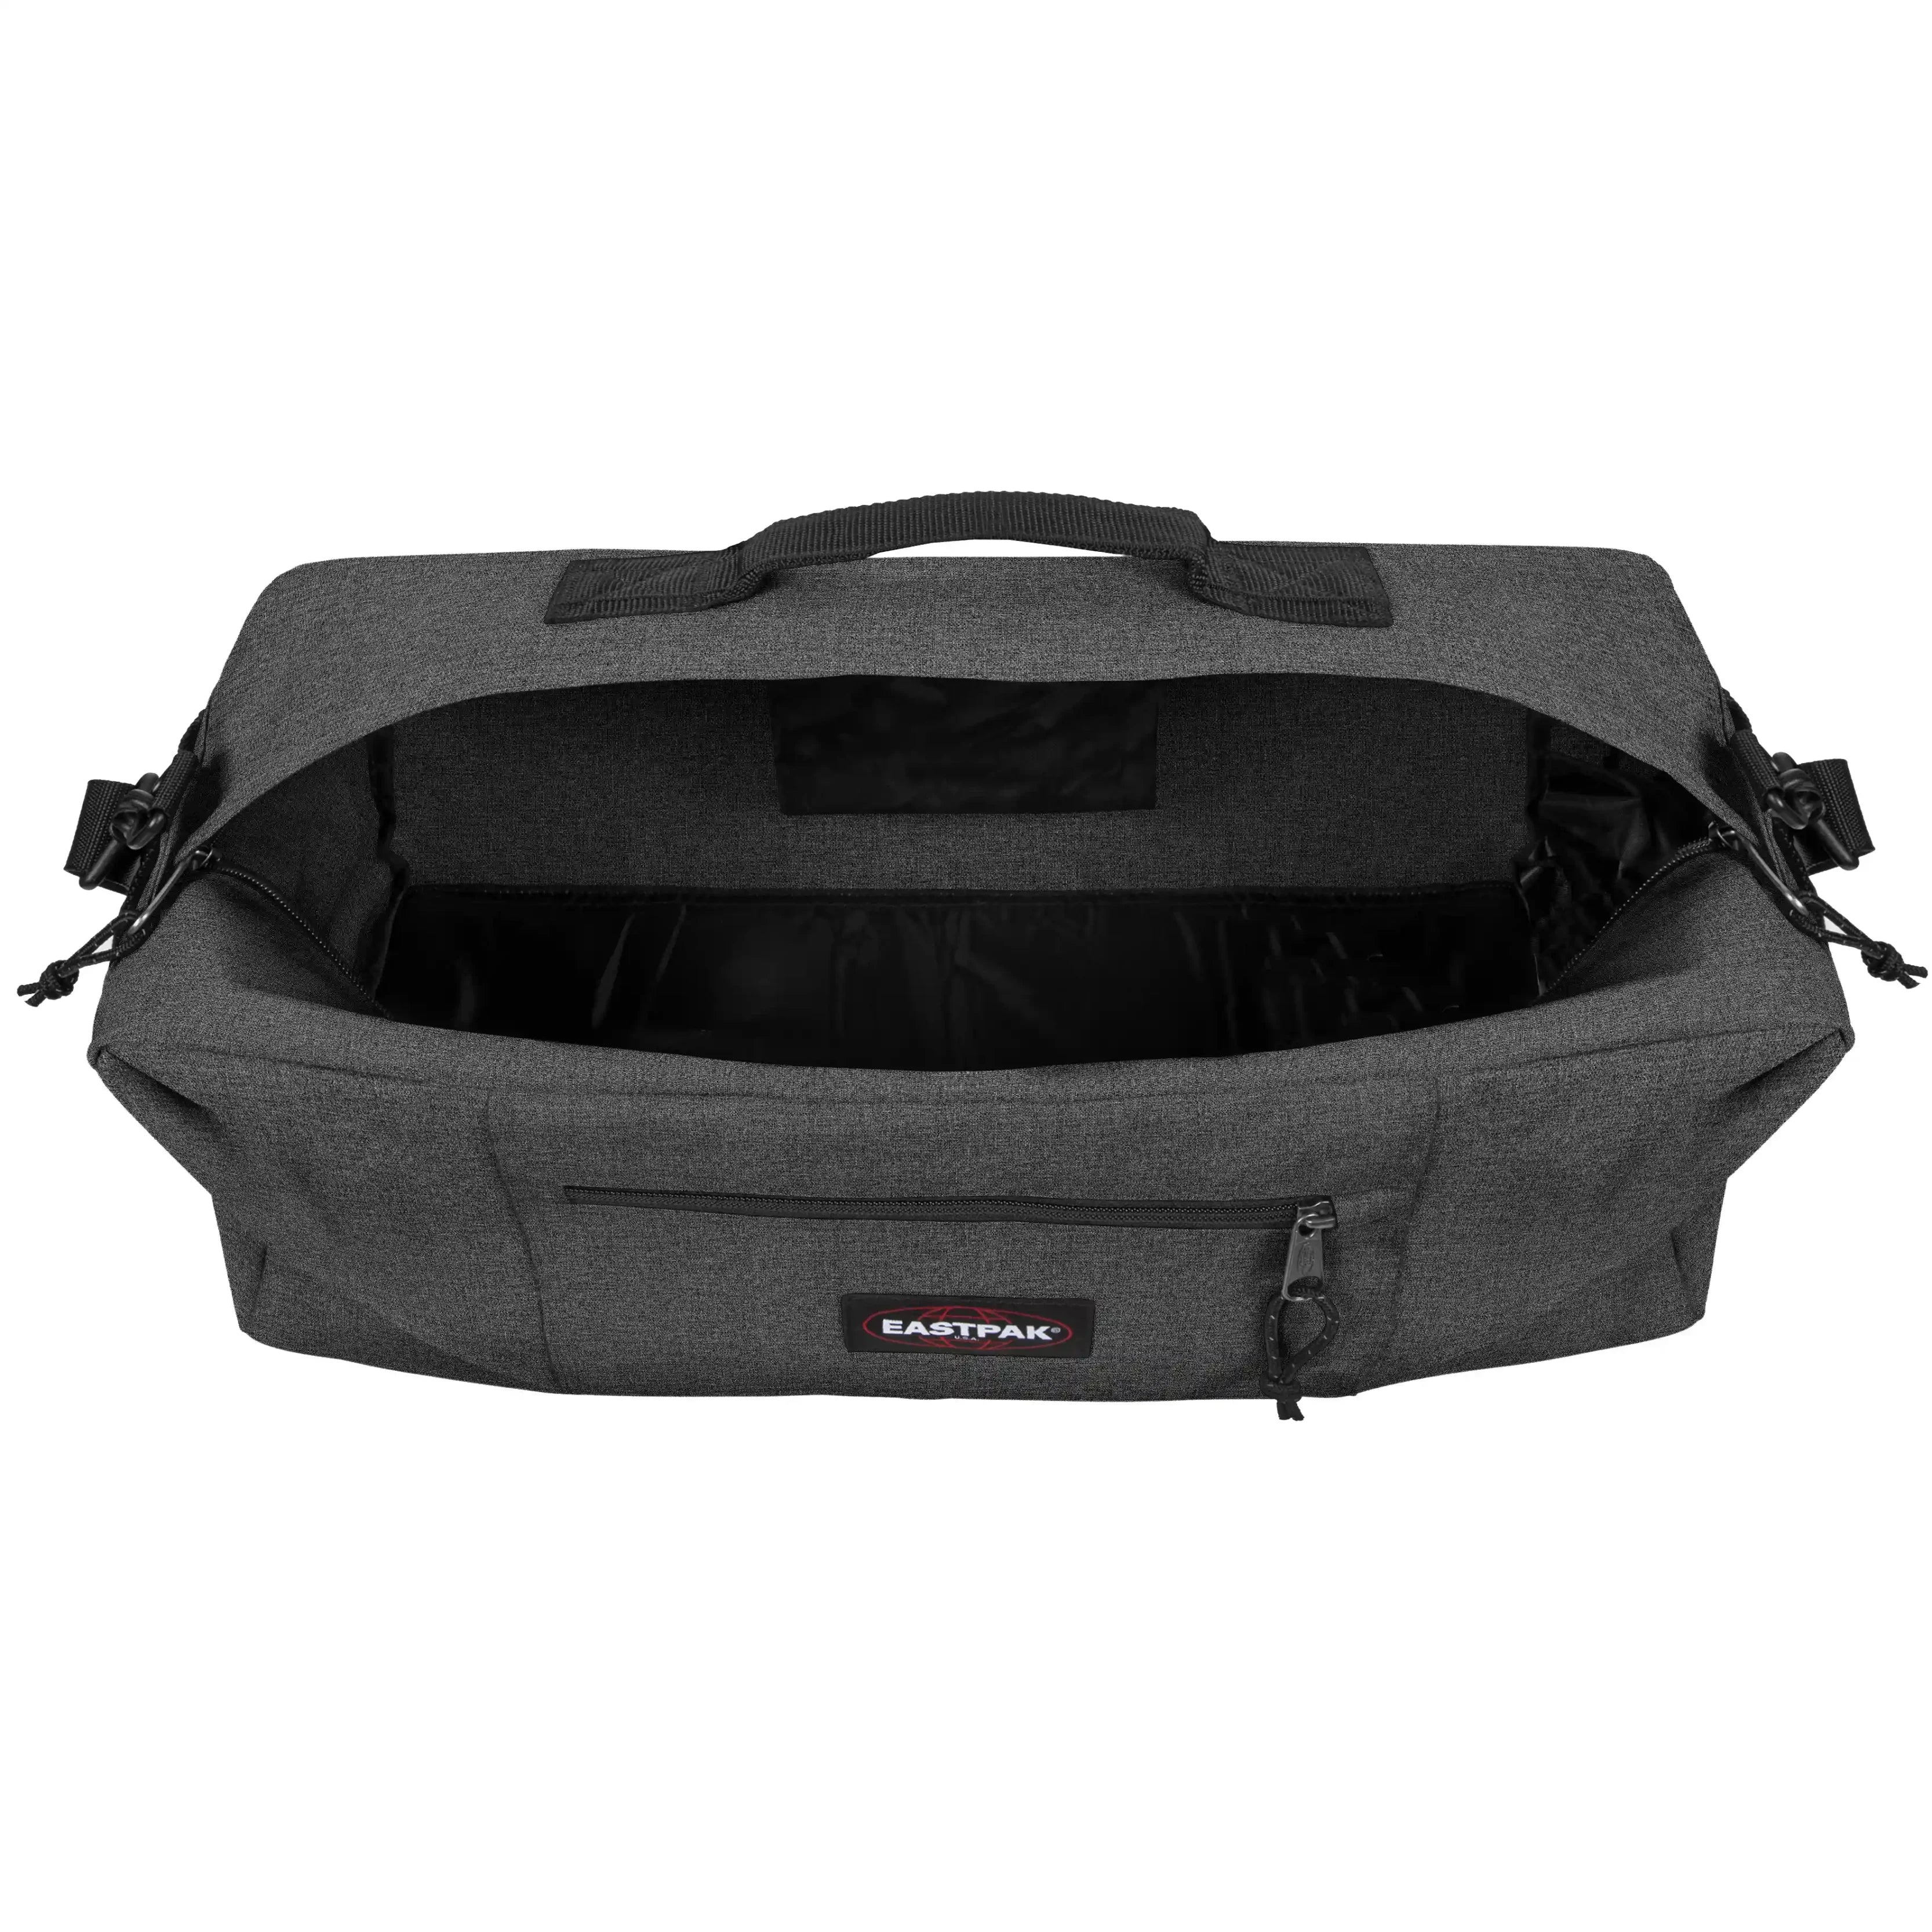 Eastpak Authentic Travel Duffl'r L Travel Bag 62 cm - Black